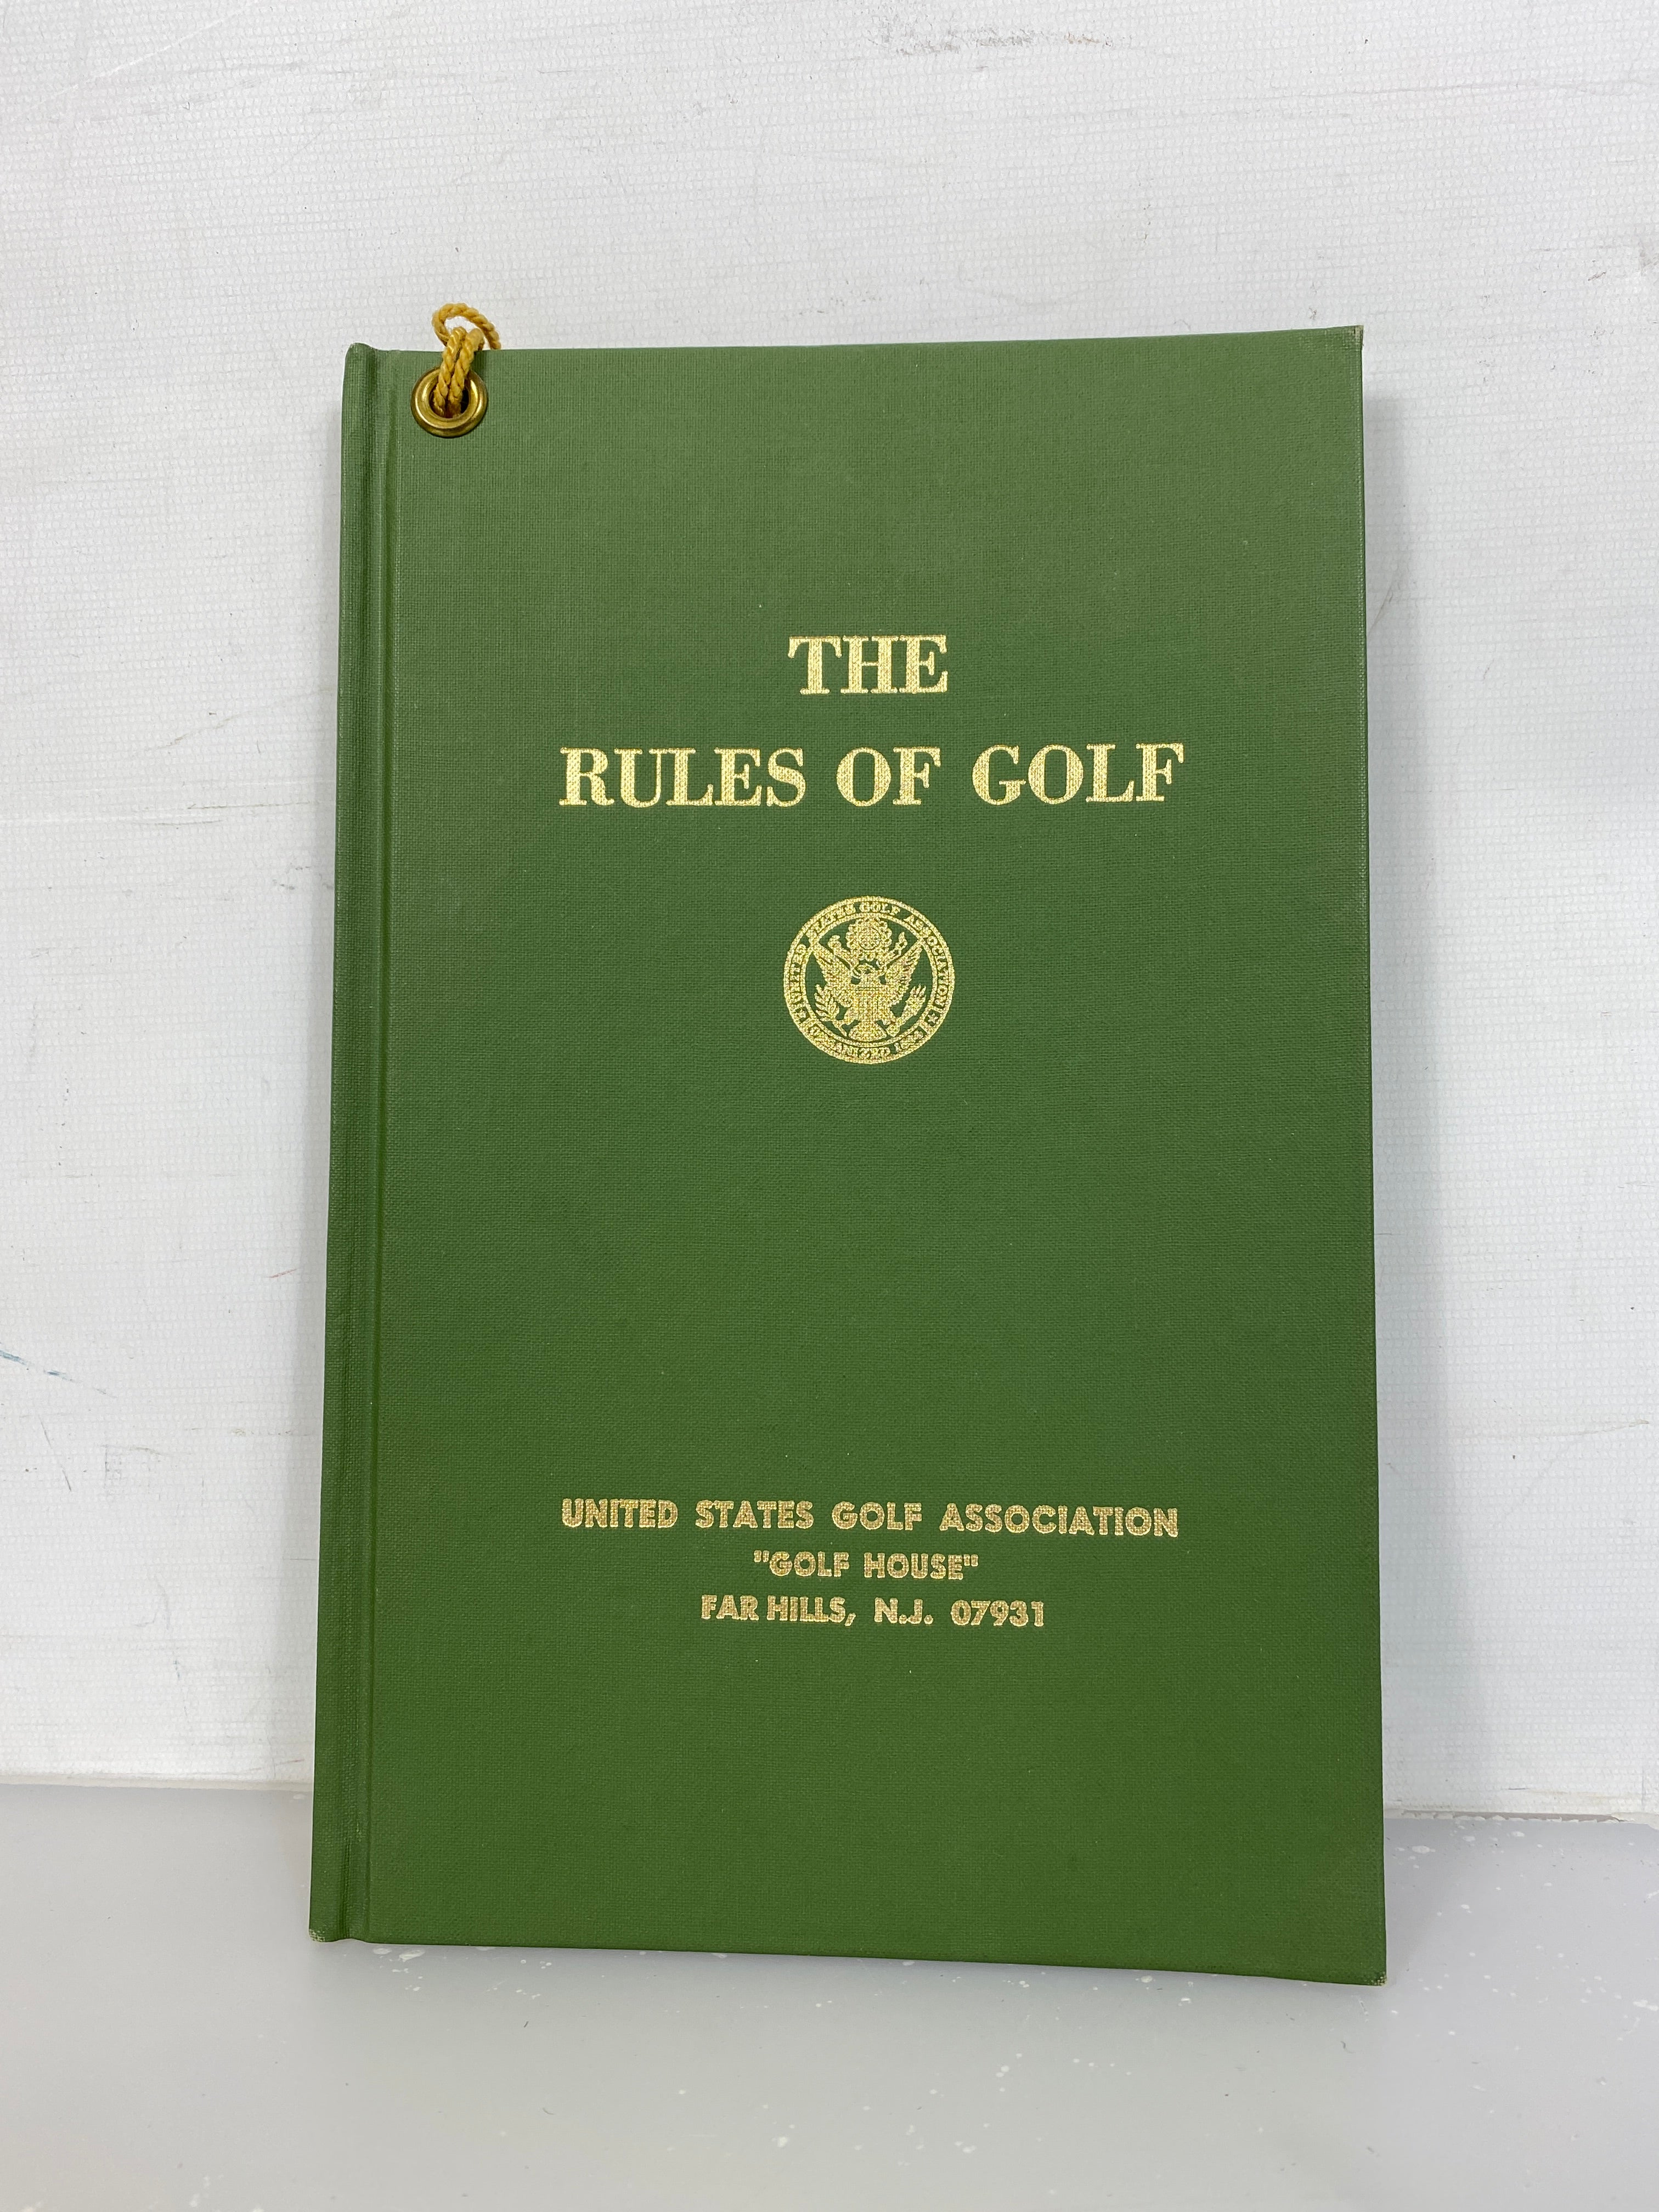 The Rules of Golf U.S. Golf Association January 1, 1974 HC